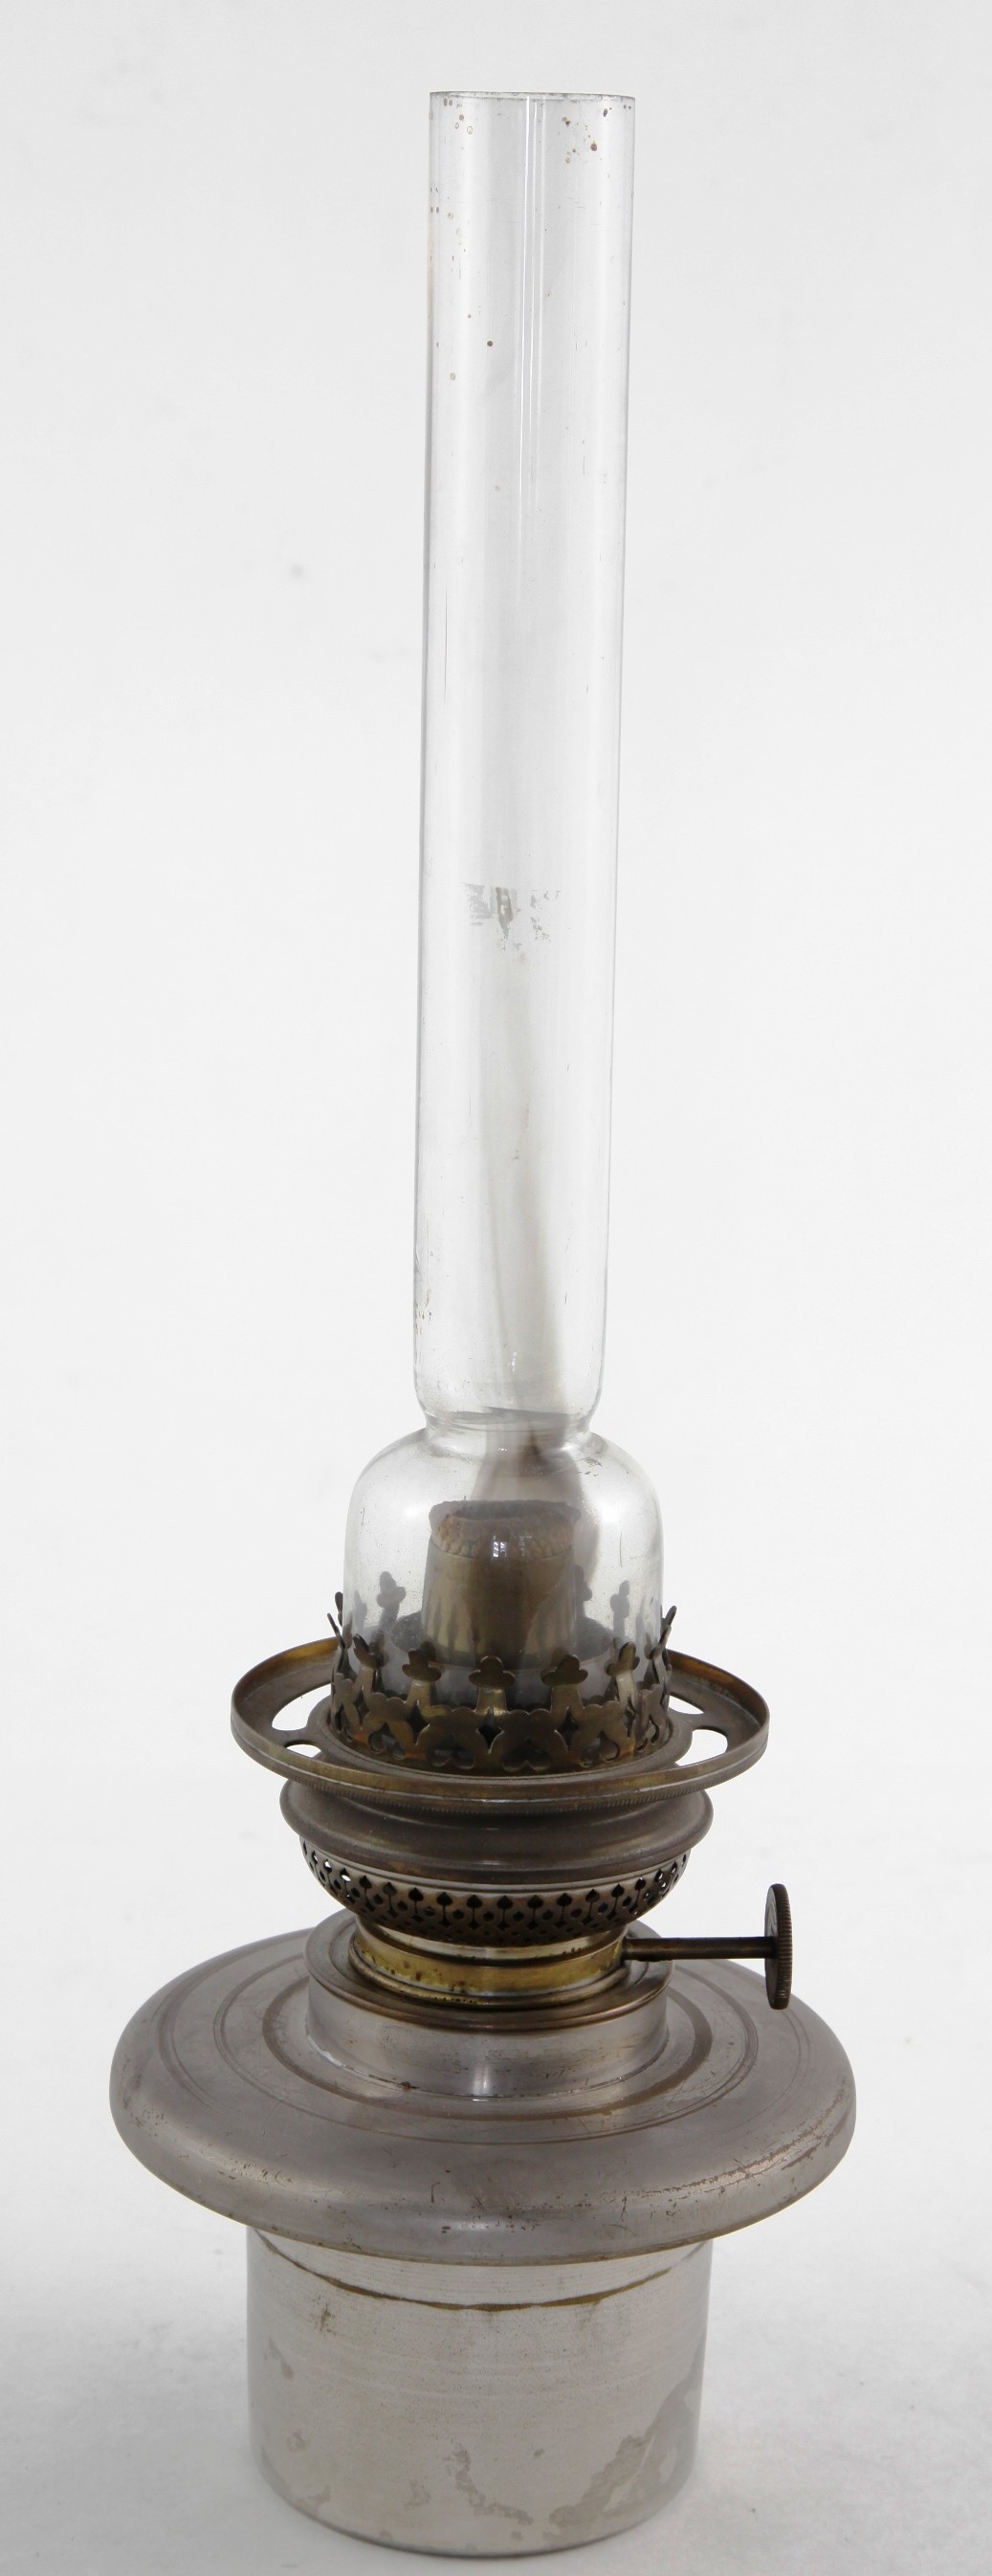 Petroleumlampe von "KOSMOS" (Hellweg-Museum Unna CC BY-NC-SA)